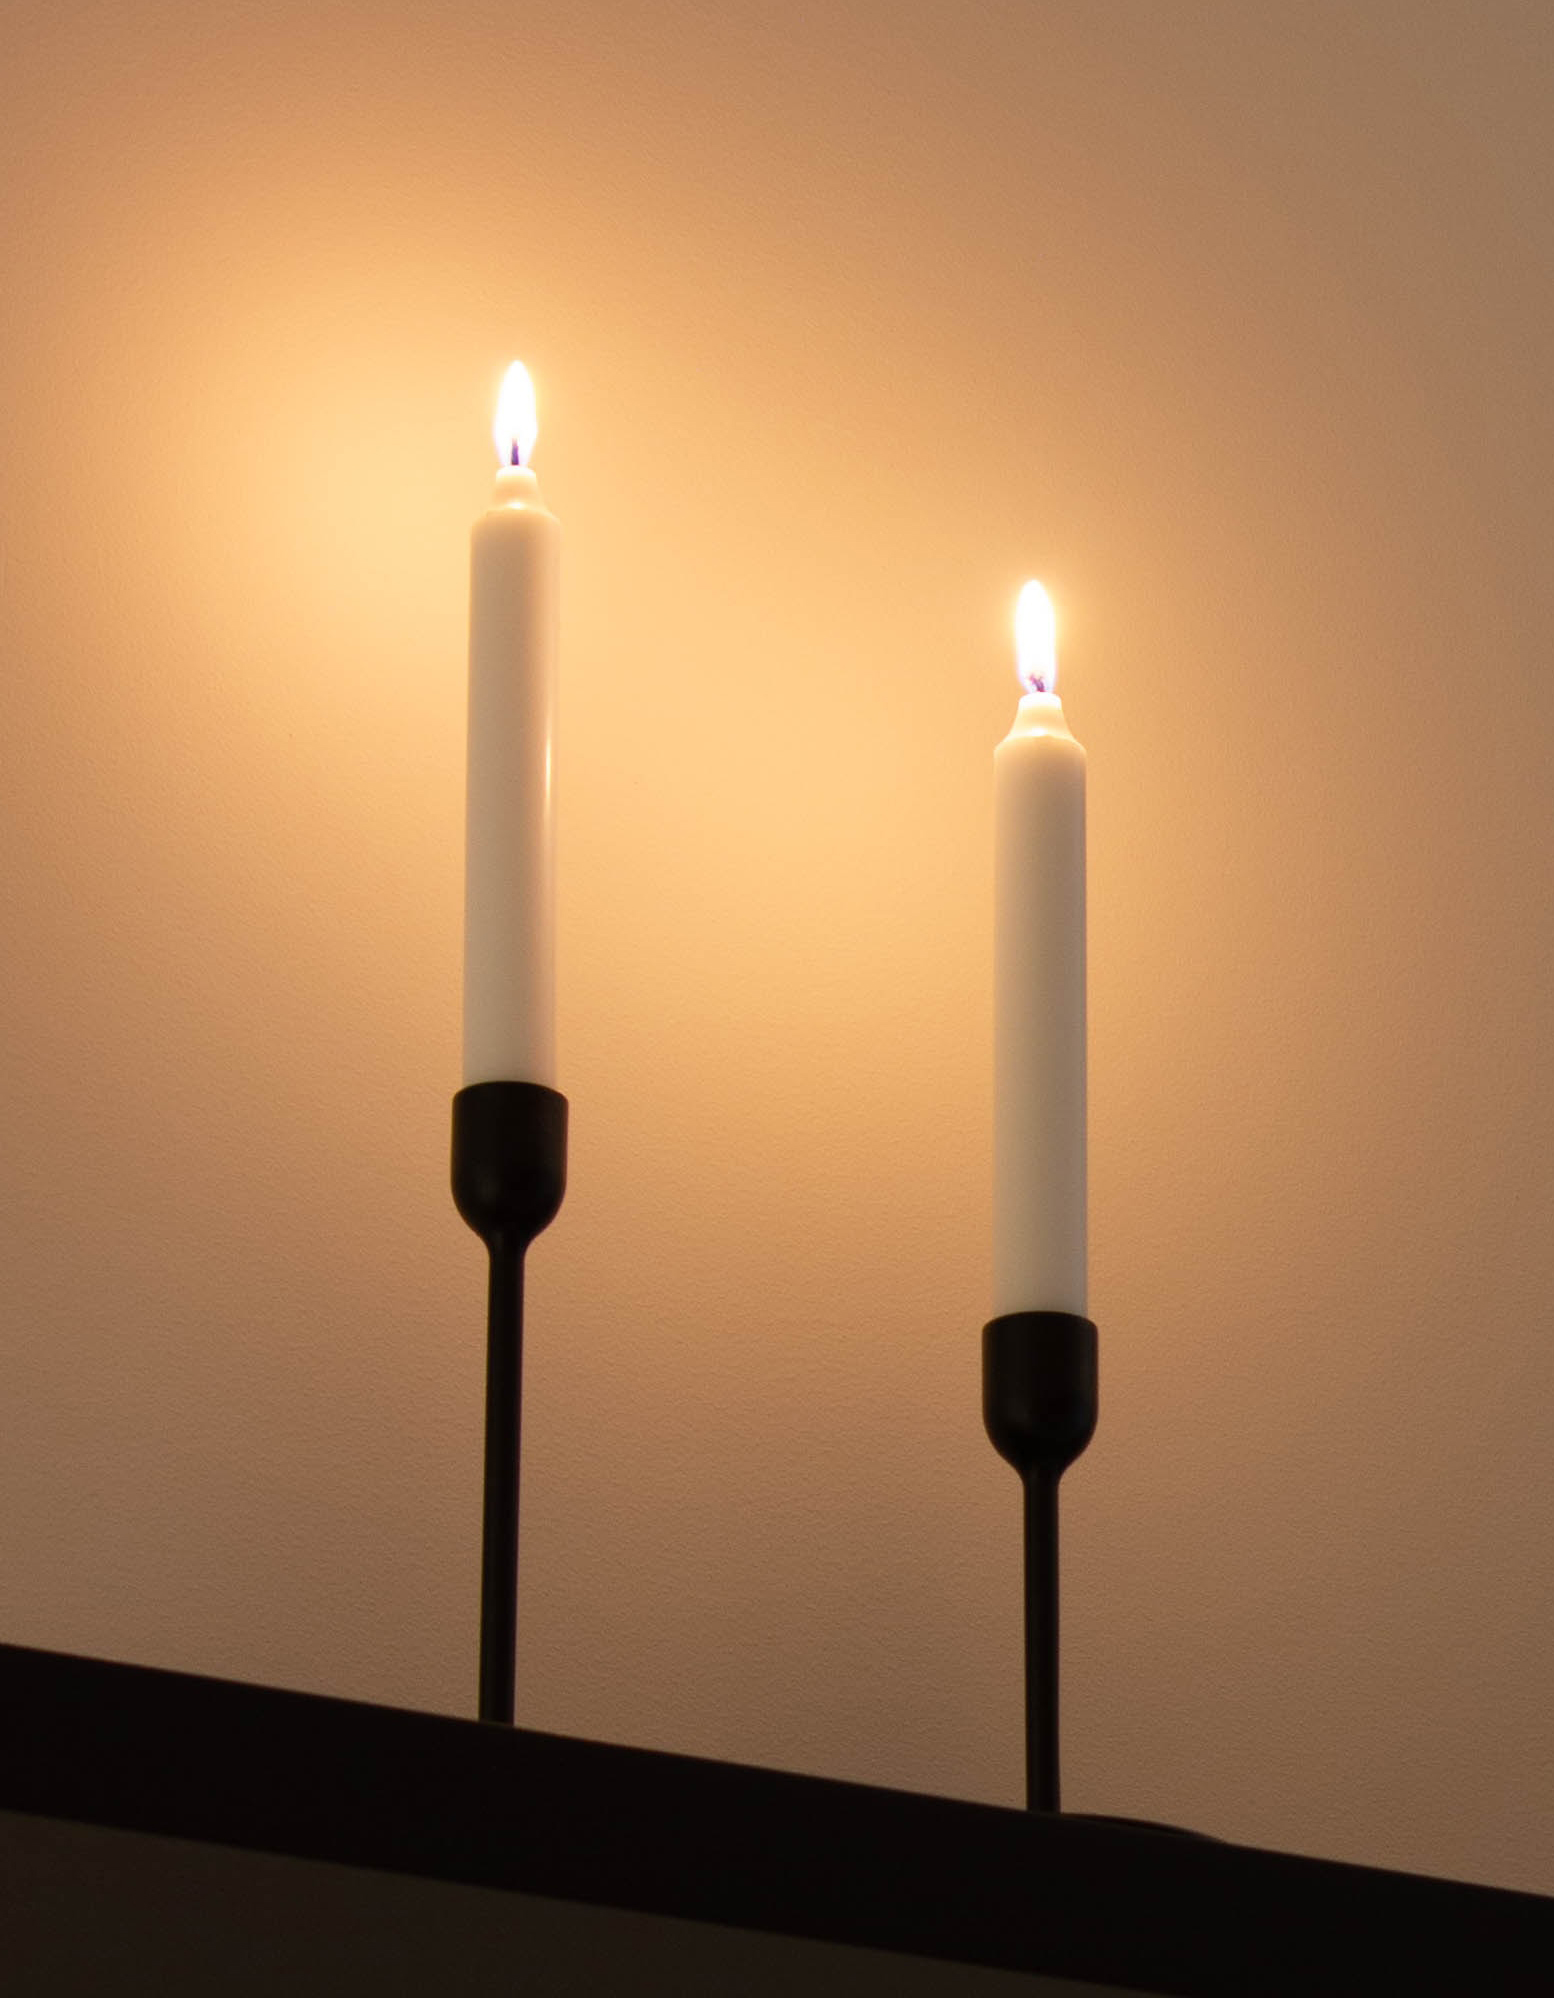 Shabbat candles on a shelf